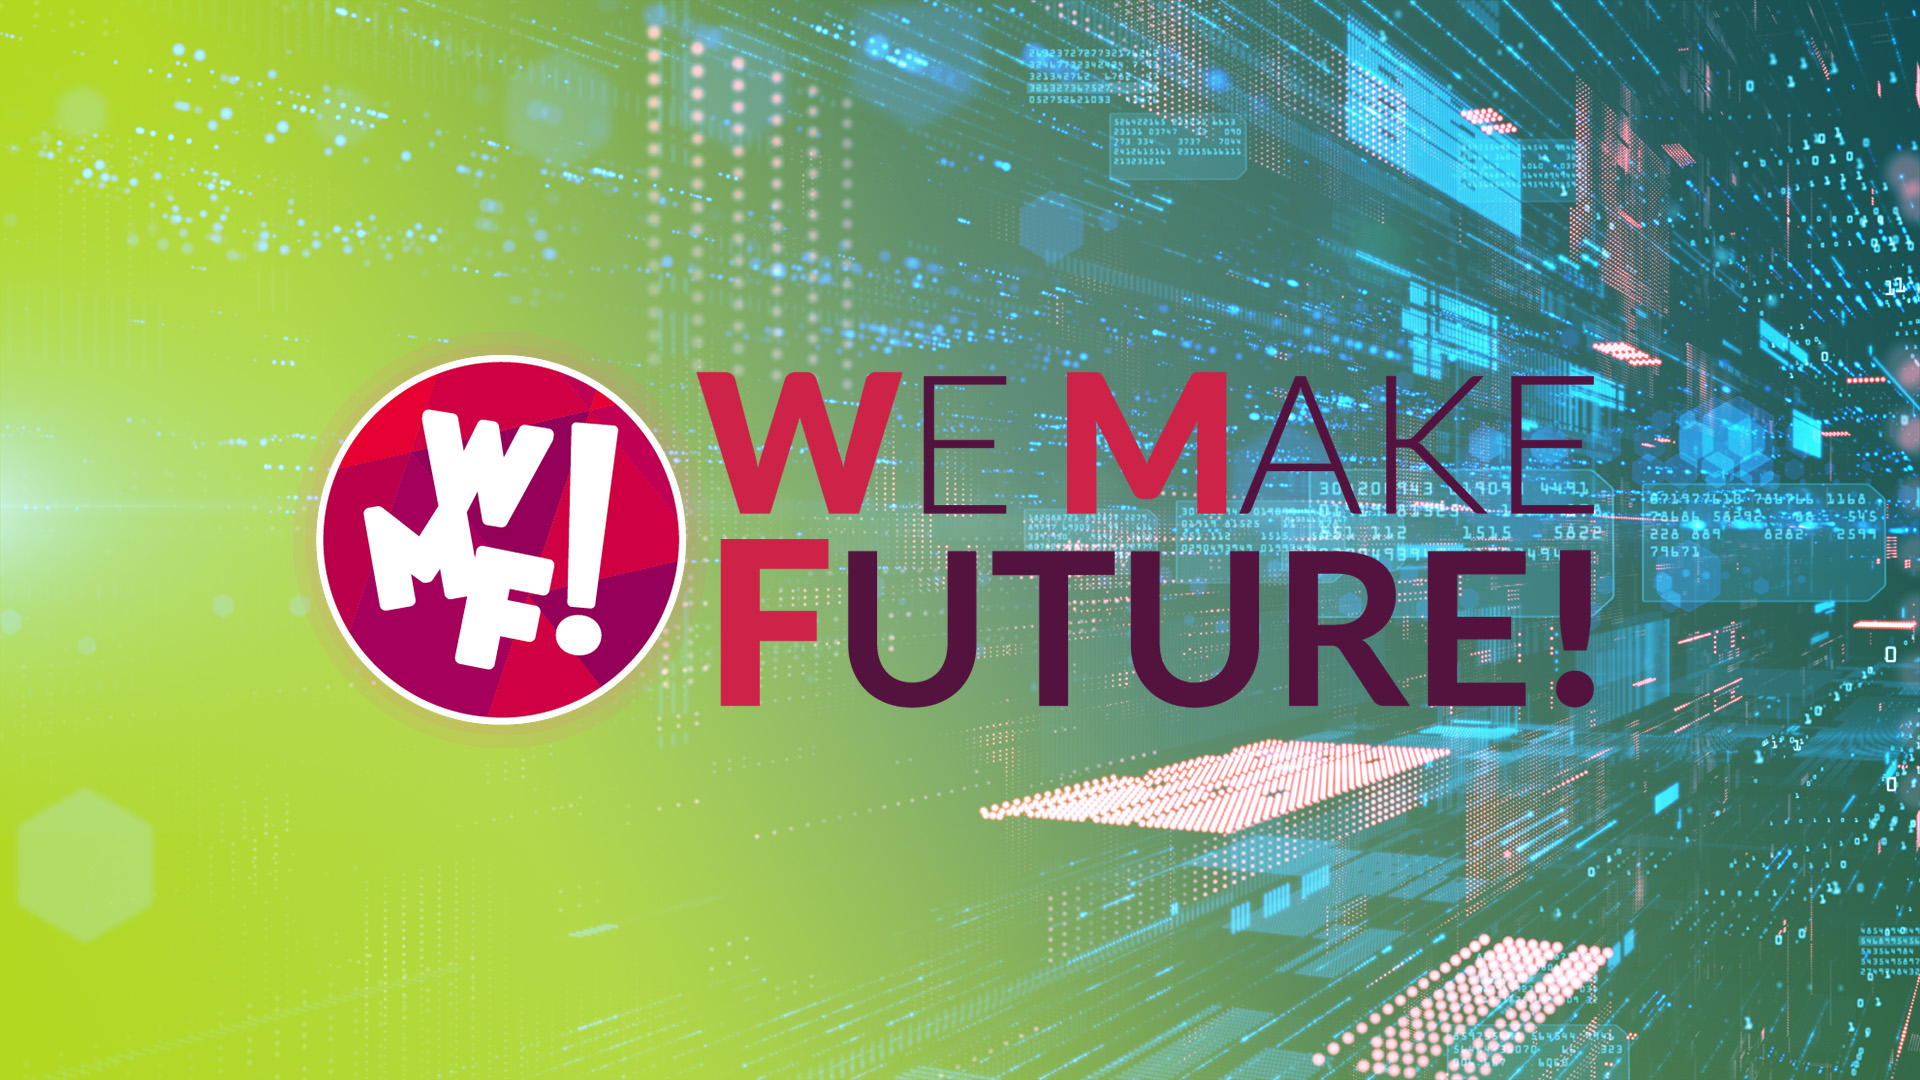 WMF – We Make Future